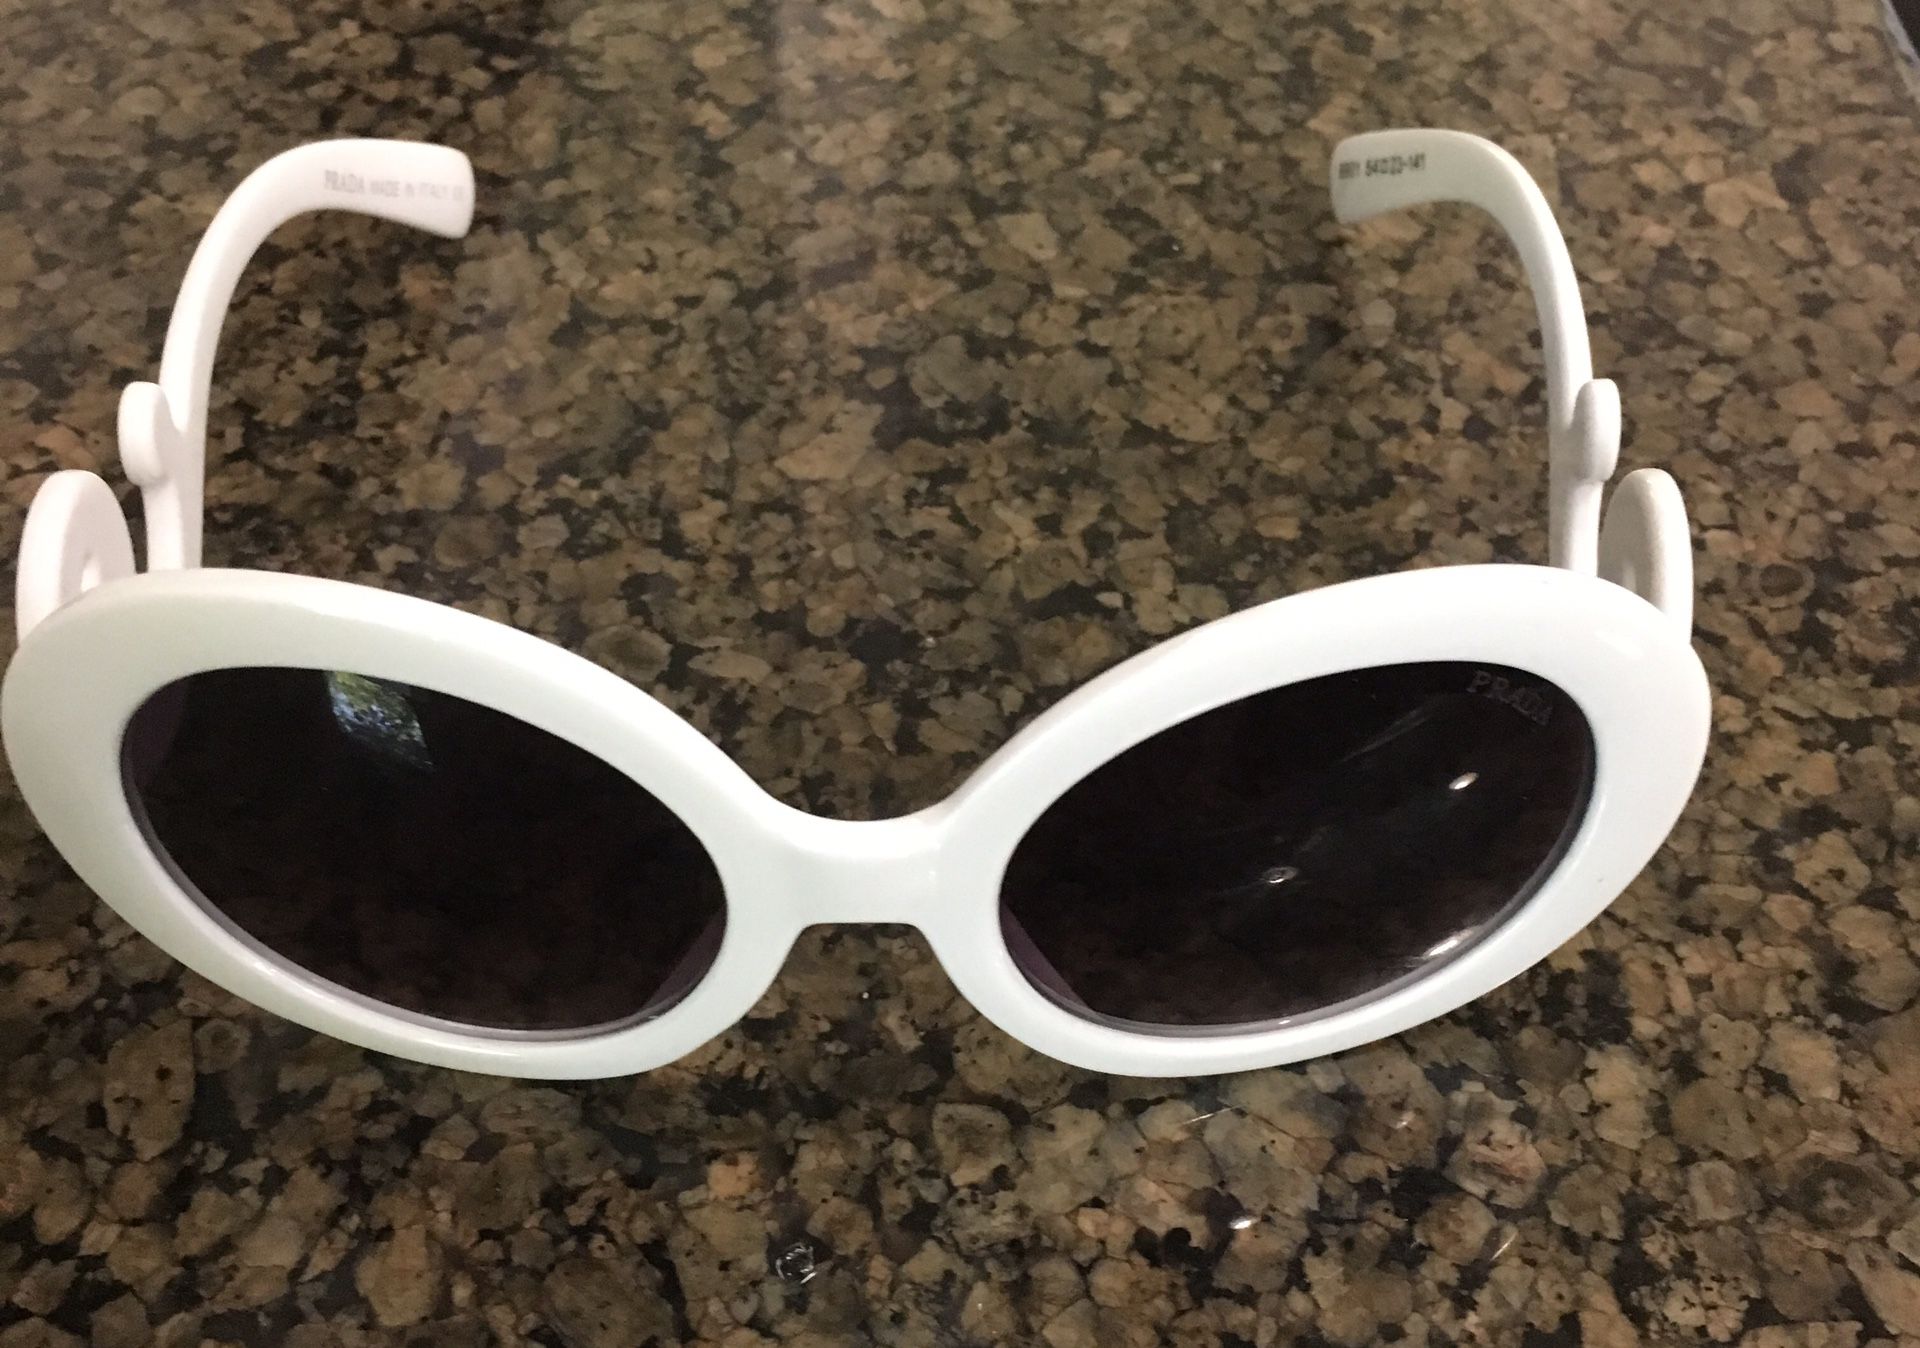 New sunglasses